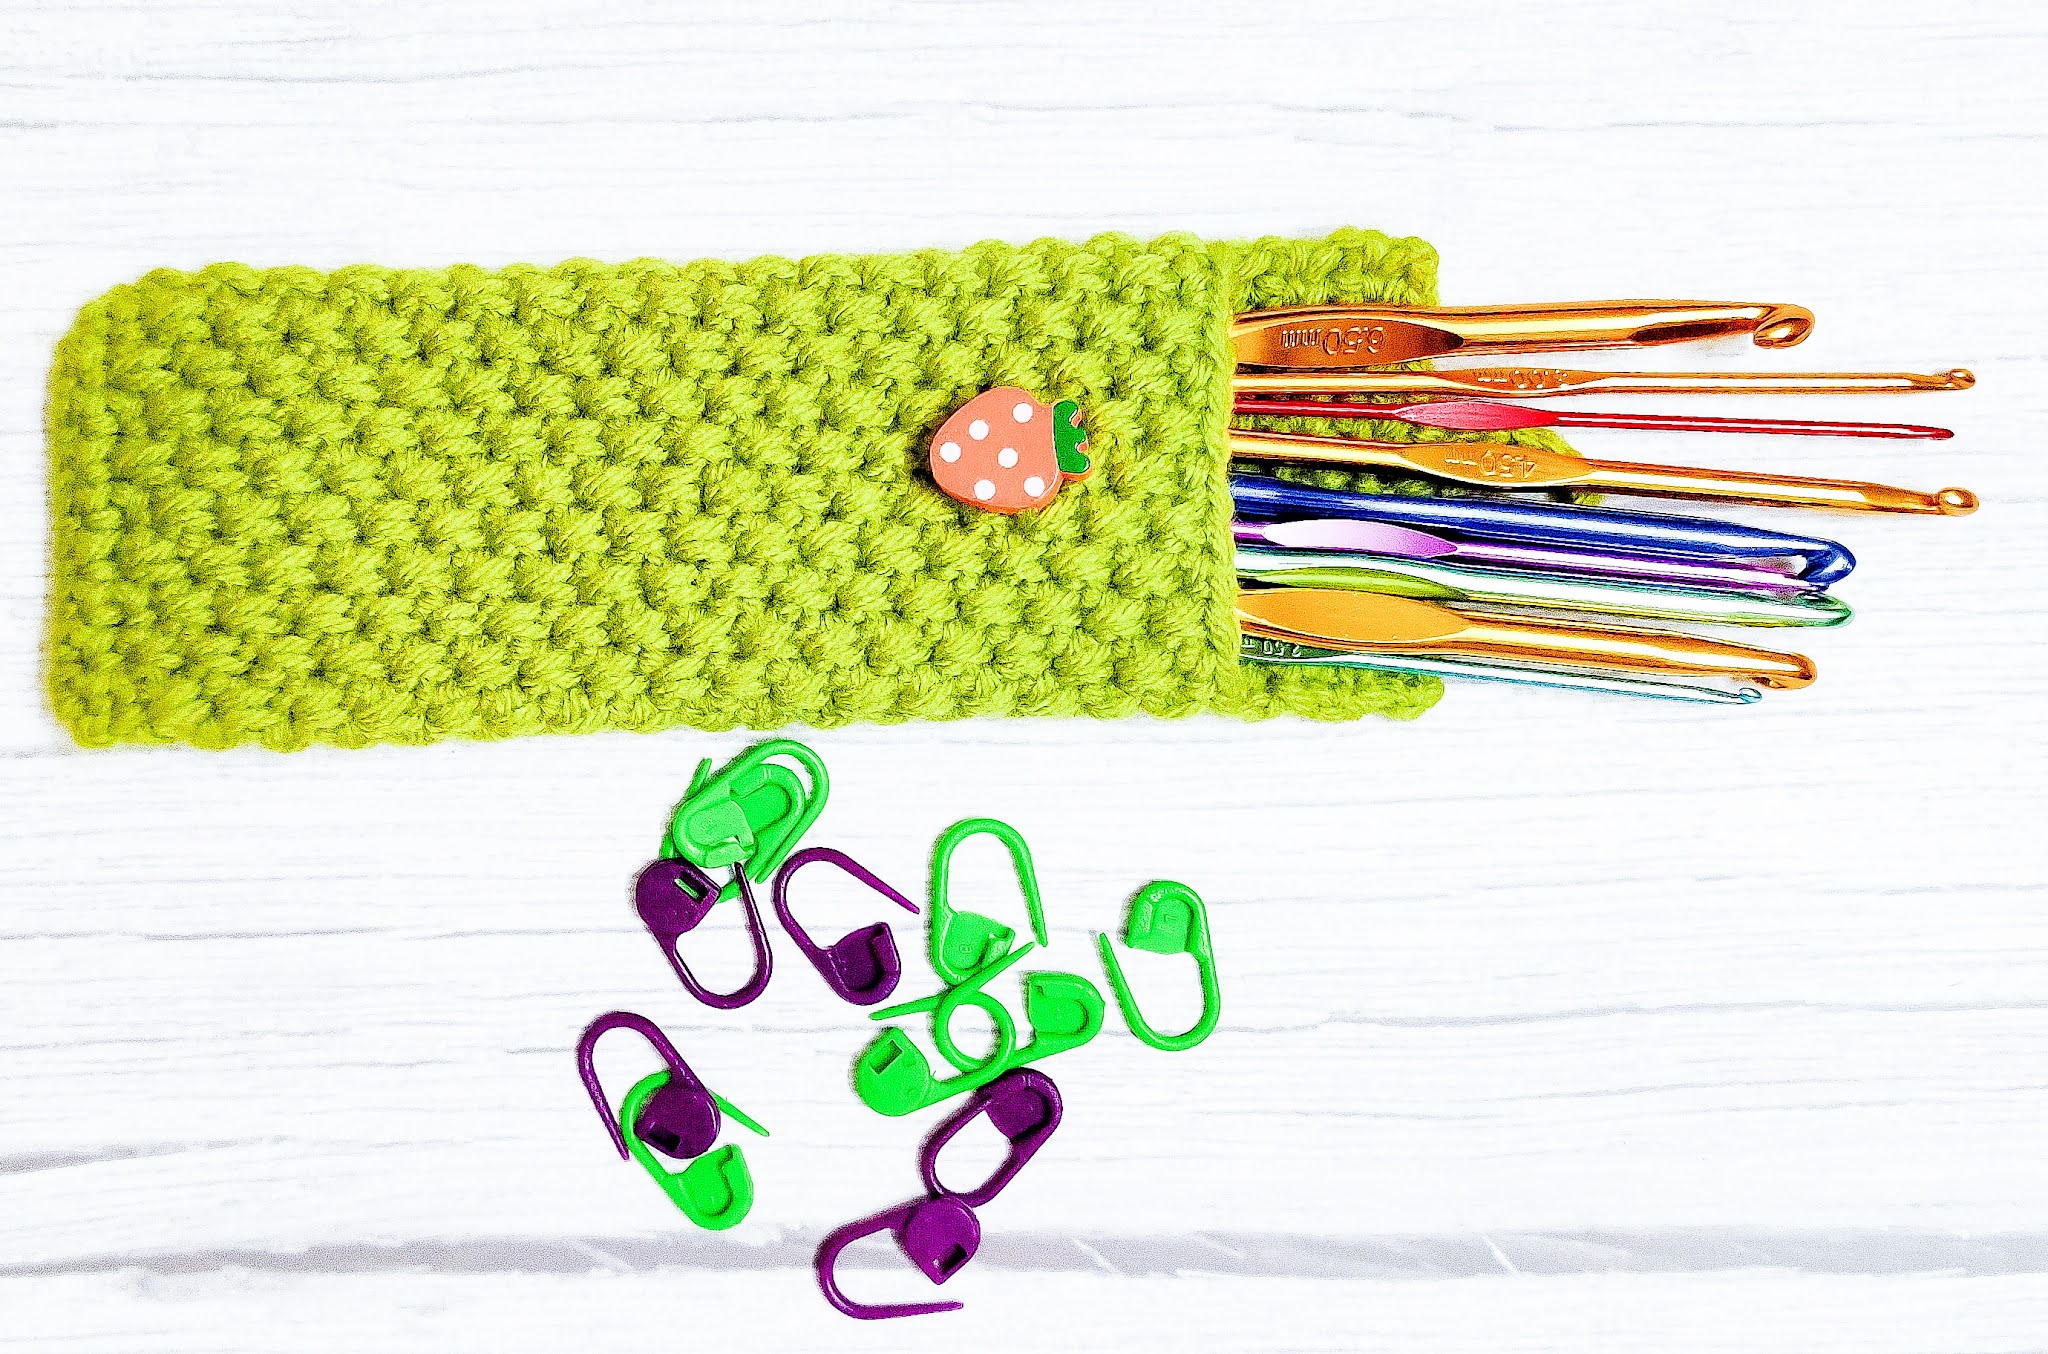 The Crochet Hook - A Wonderful Thing!